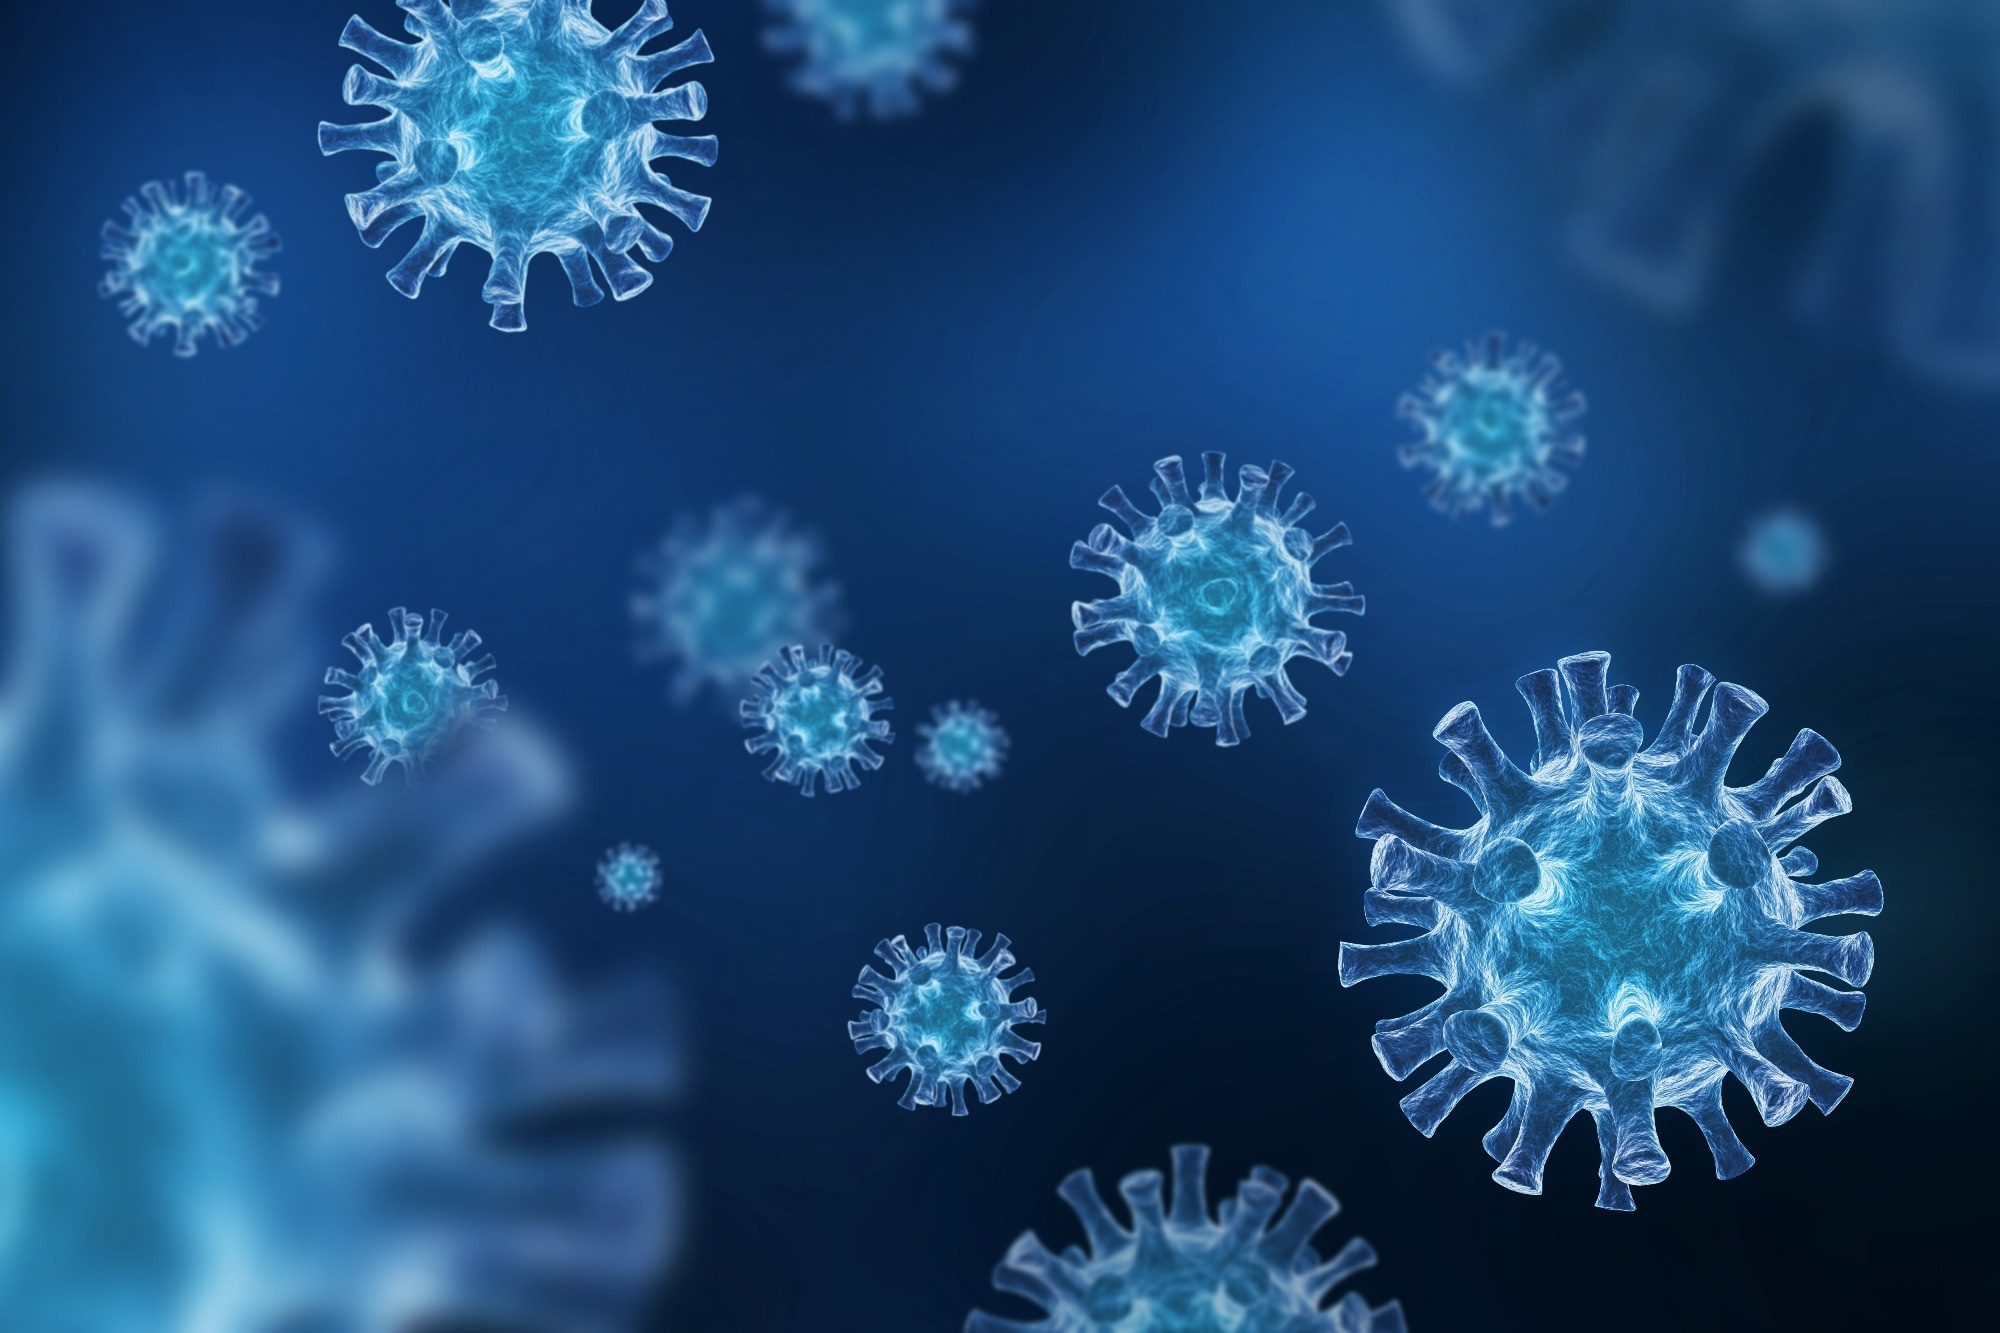 Study: Universal features of Nsp1-mediated translational shutdown by coronaviruses. Image Credit: Jerome-Cronenberger / Shutterstock.com